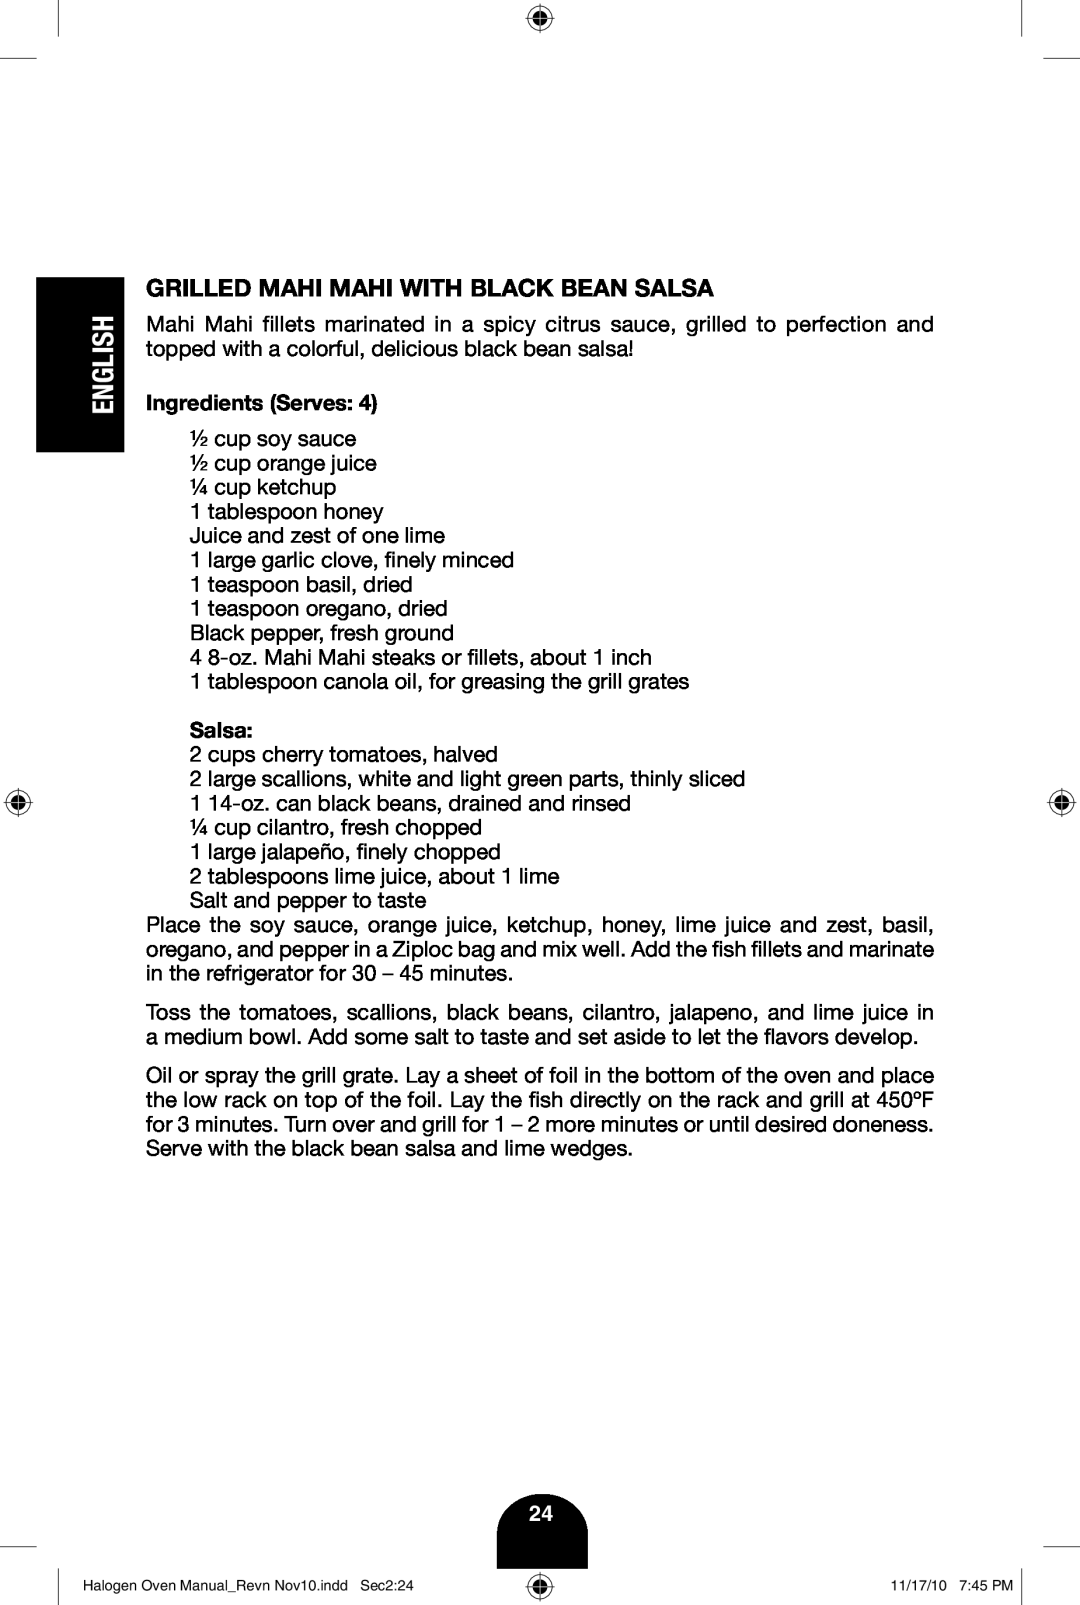 Fagor America 670040380 user manual Grilled Mahi Mahi With Black Bean Salsa, English 